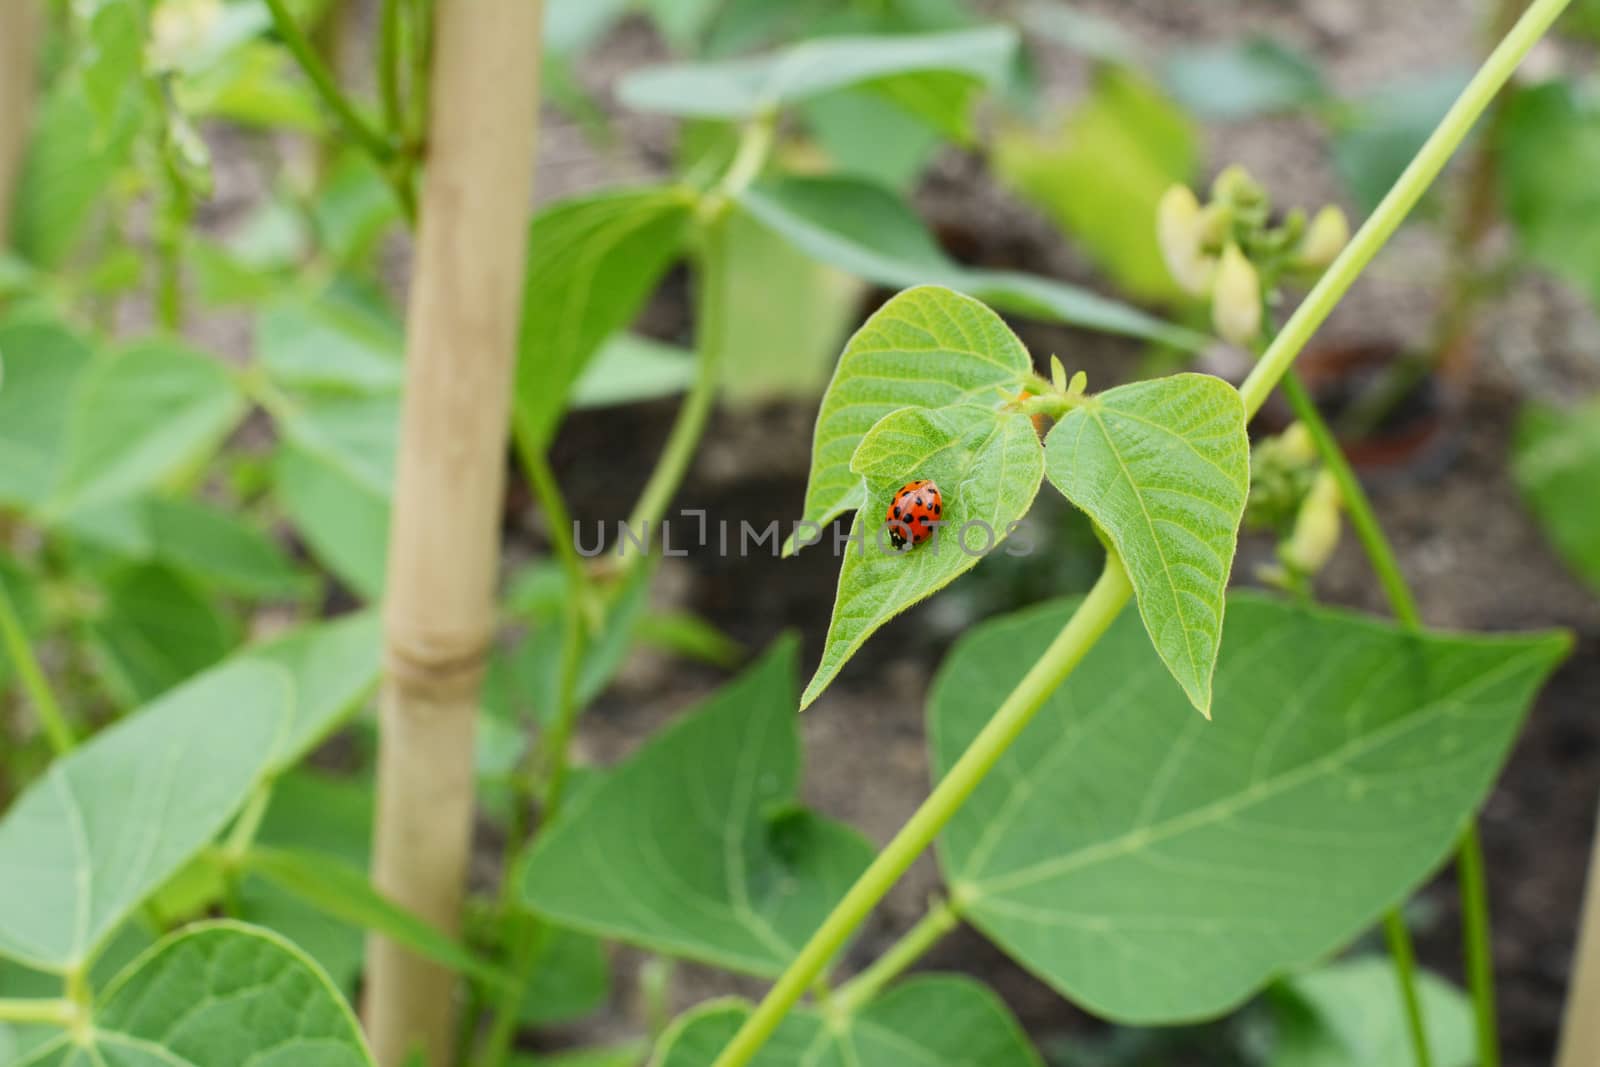 Harlequin ladybird, Harmonia axyridis, on the leaf of a runner bean vine in an allotment garden